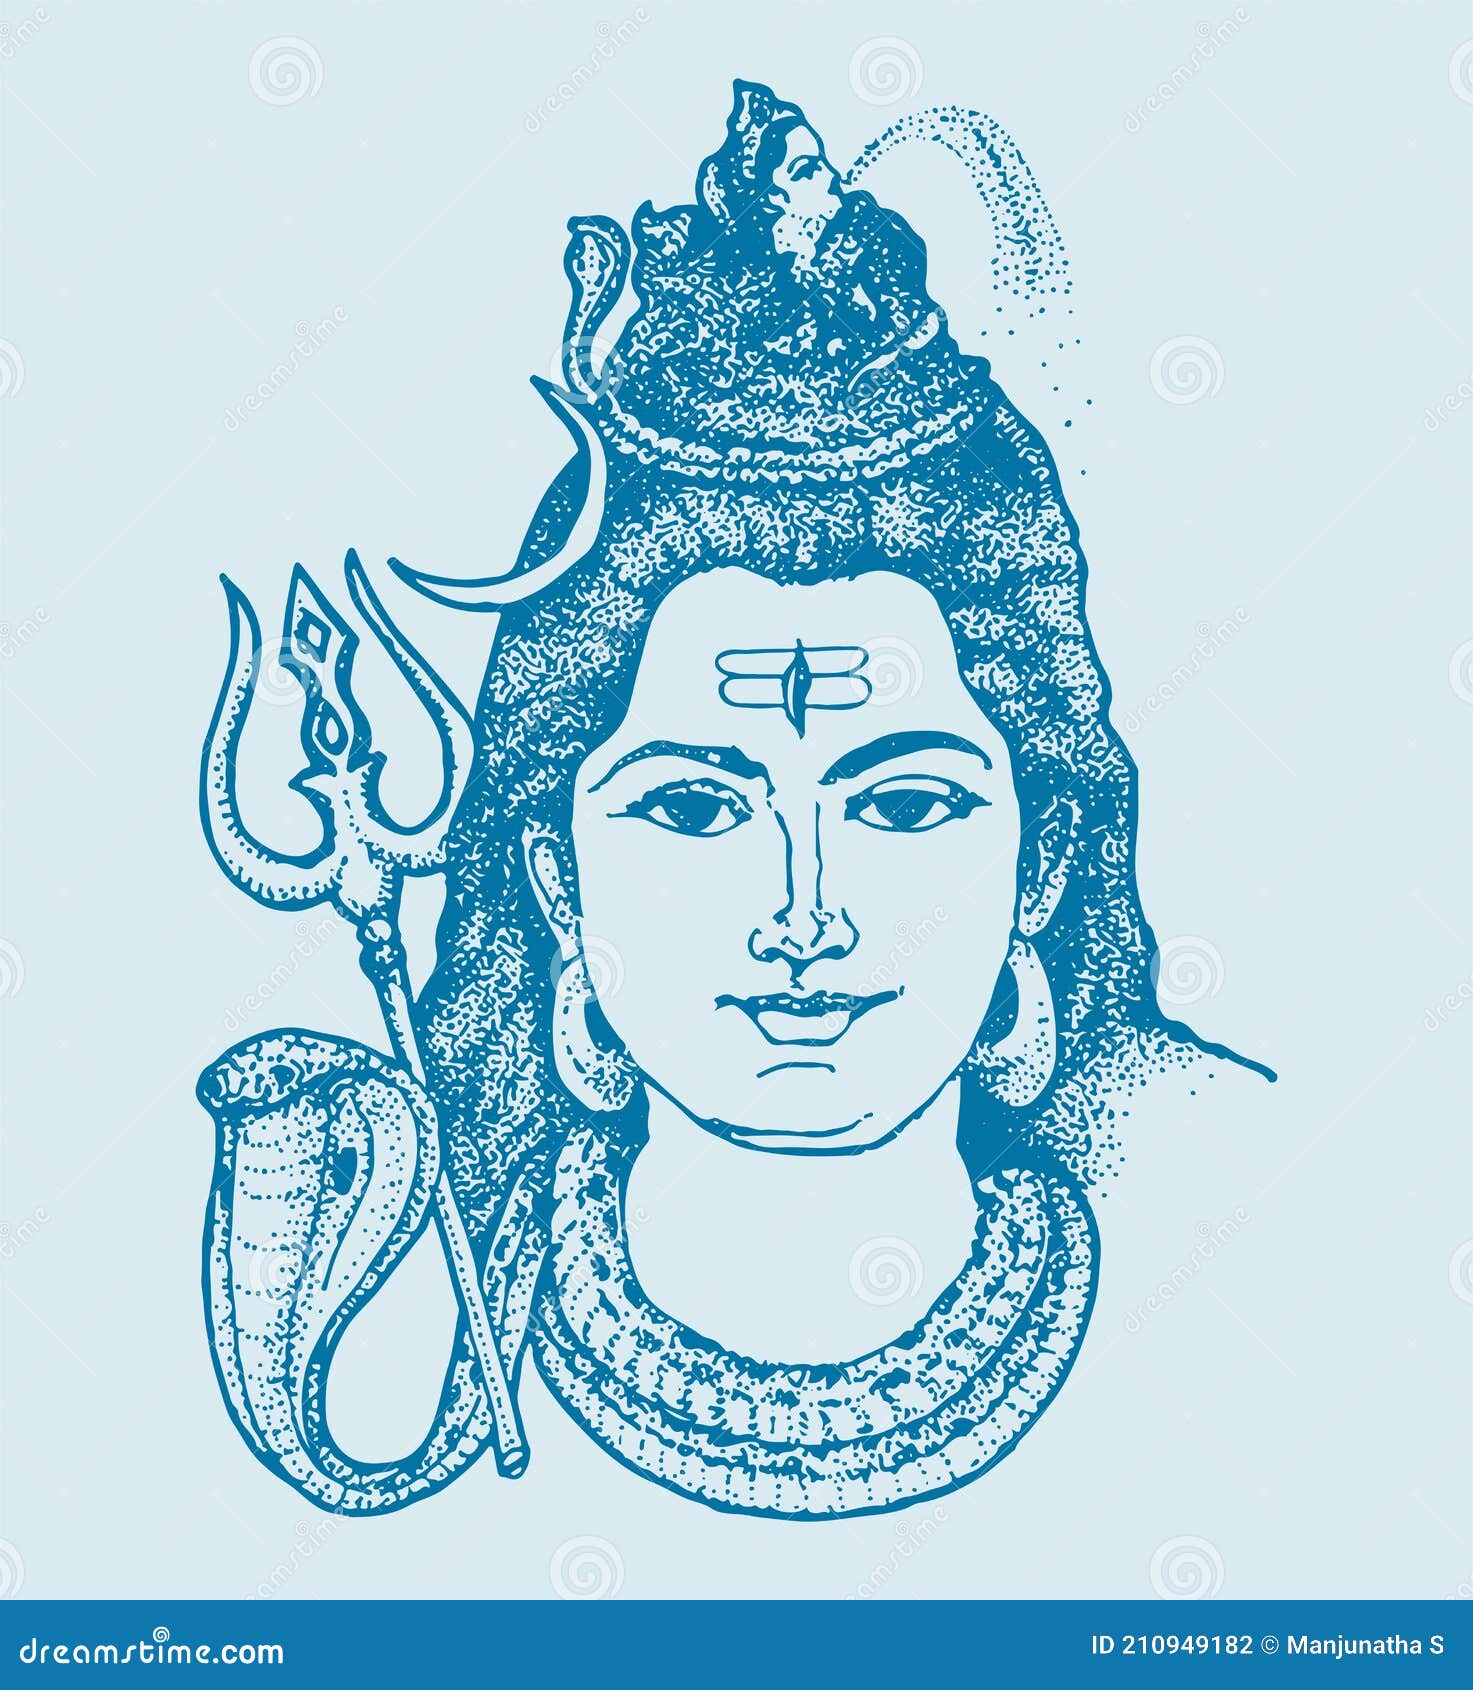 Lord Shiva | Shiva art, Art drawings sketches, Art drawings sketches simple